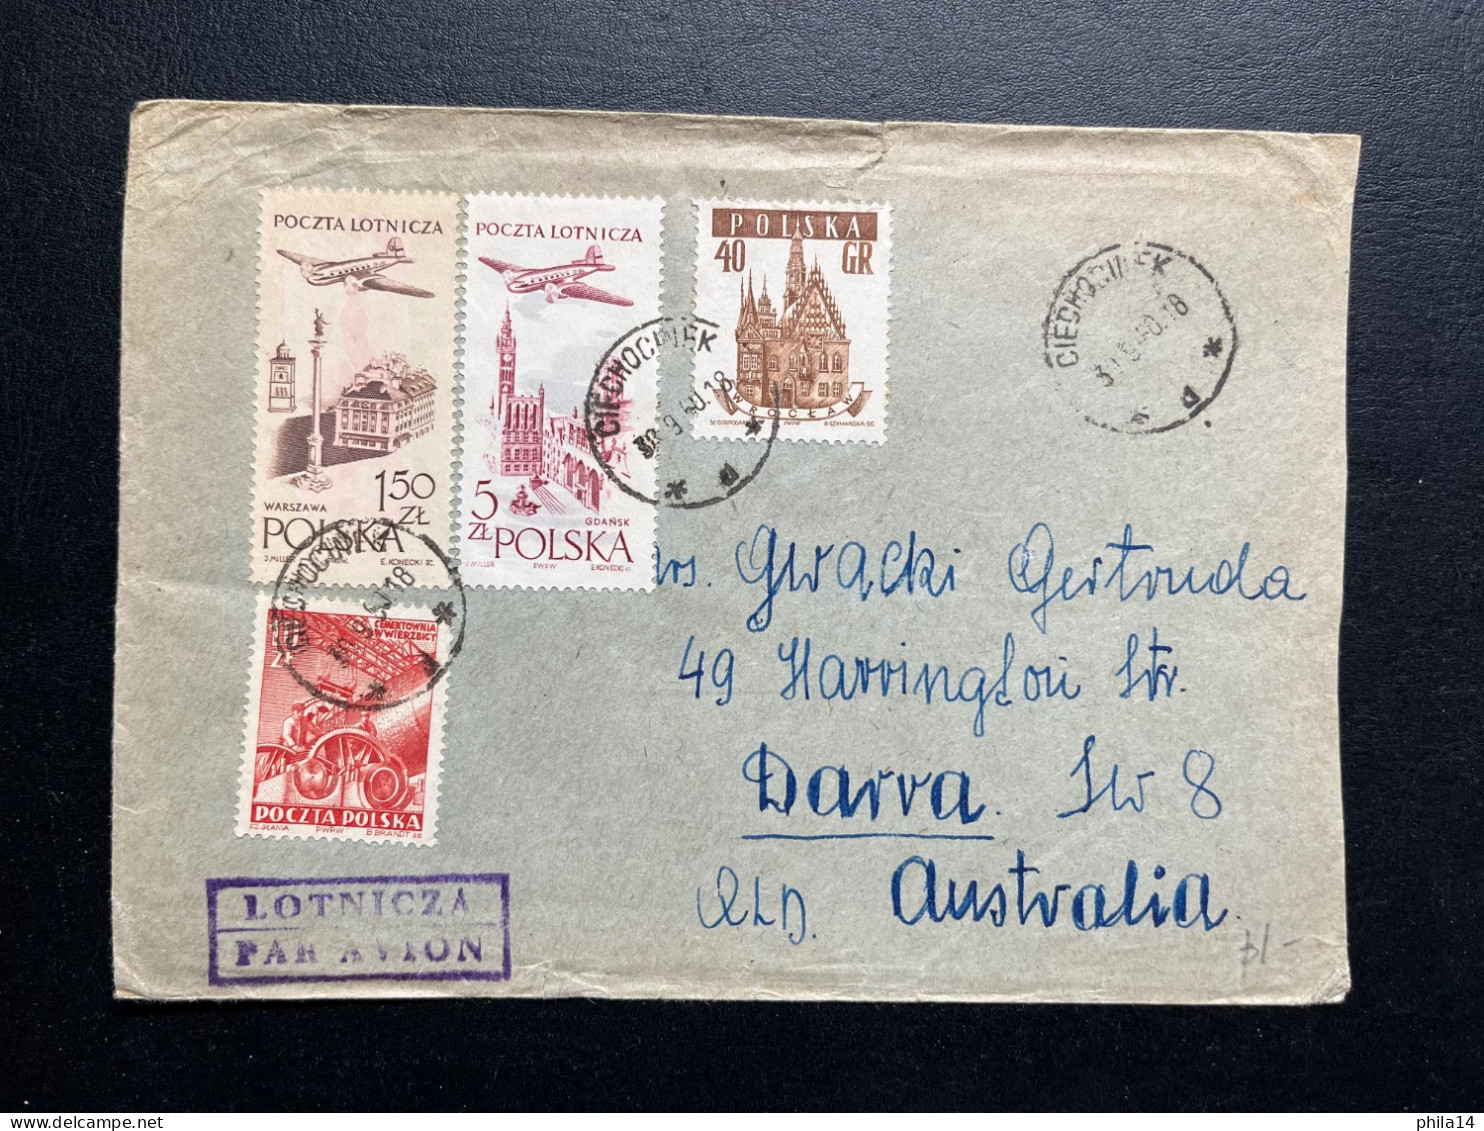 ENVELOPPE POLOGNE CIECHOCWEK 1960 POUR DARVA AUSTRALIE - Storia Postale